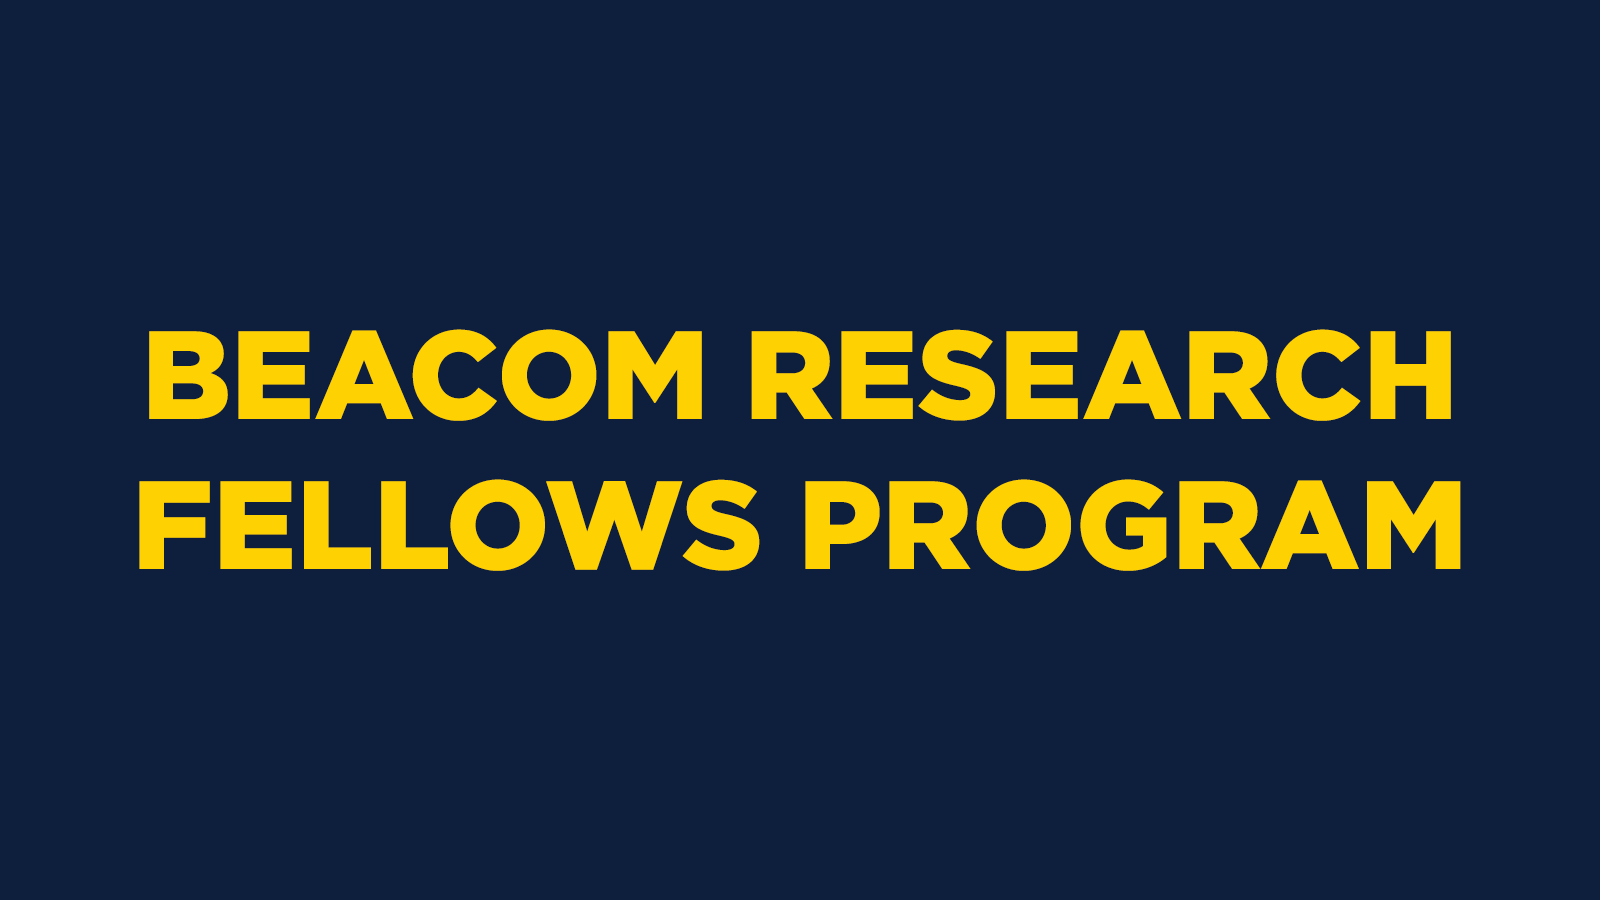 Beacom Research Fellows Program